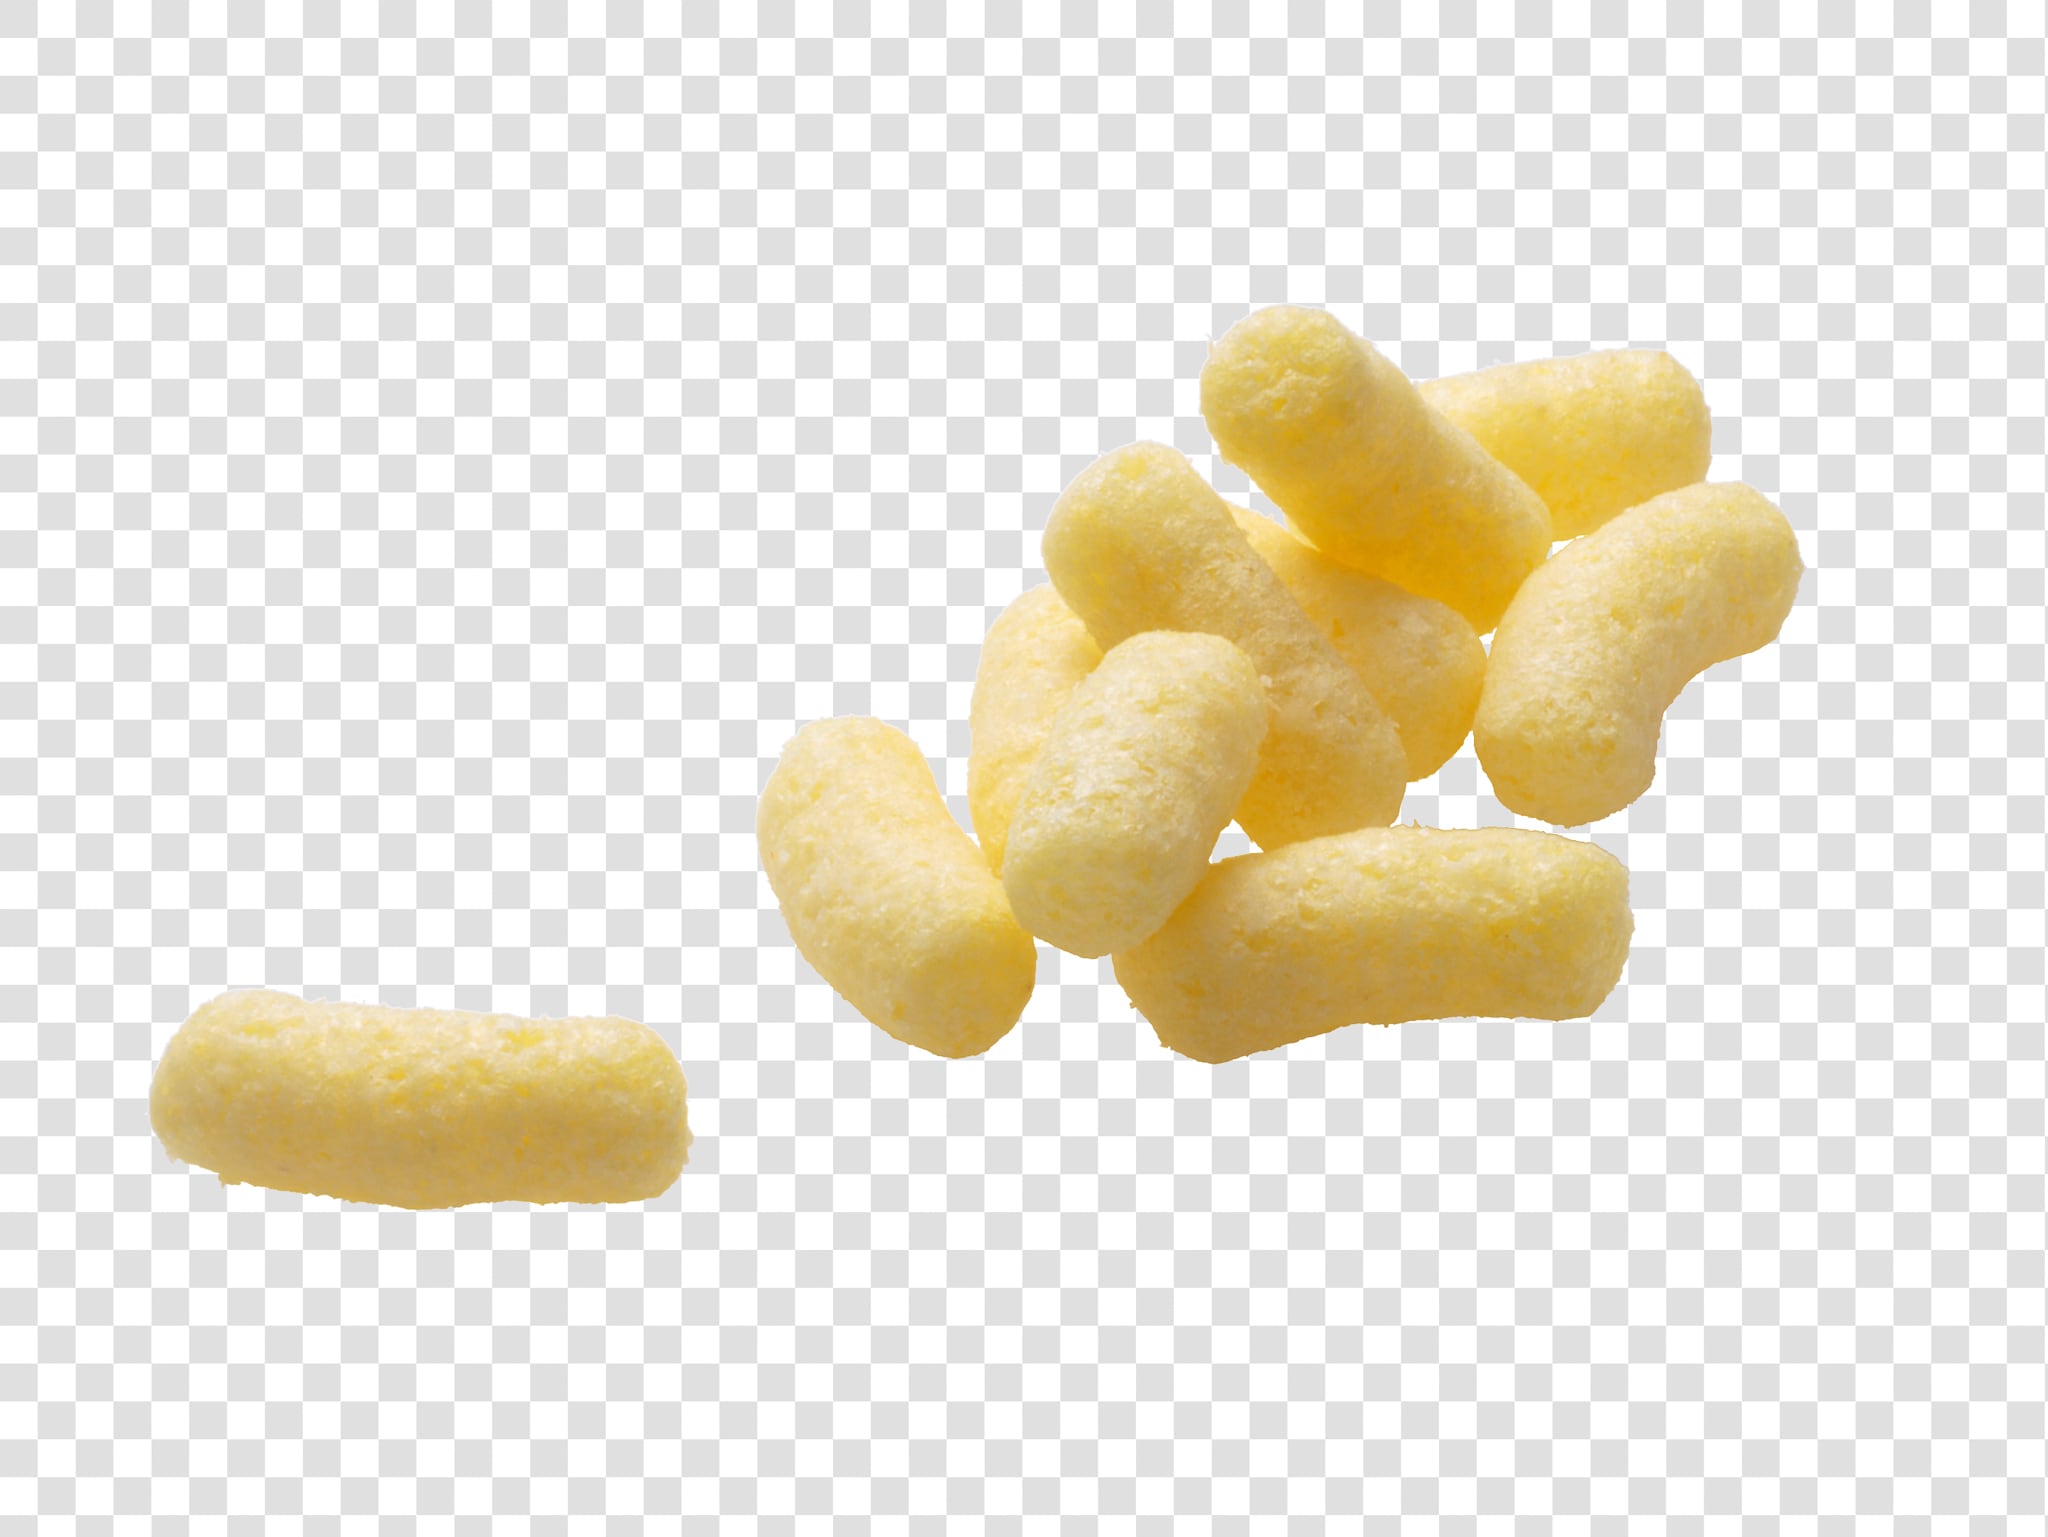 Corn sticks image asset with transparent background